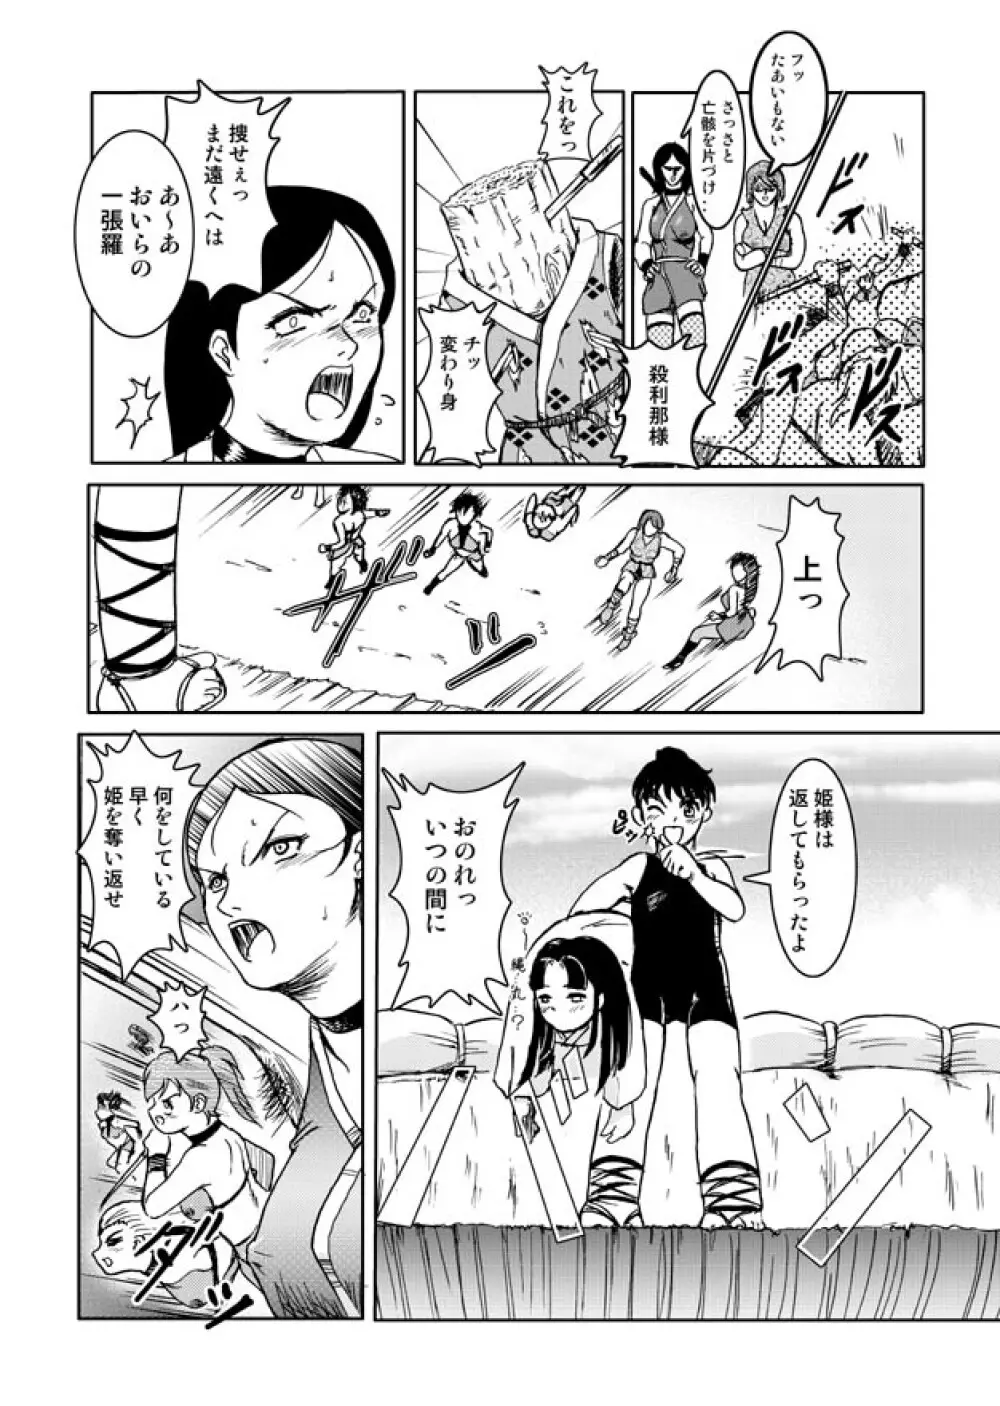 Same-themed manga about kid fighting female ninjas from japanese imageboard. 5ページ